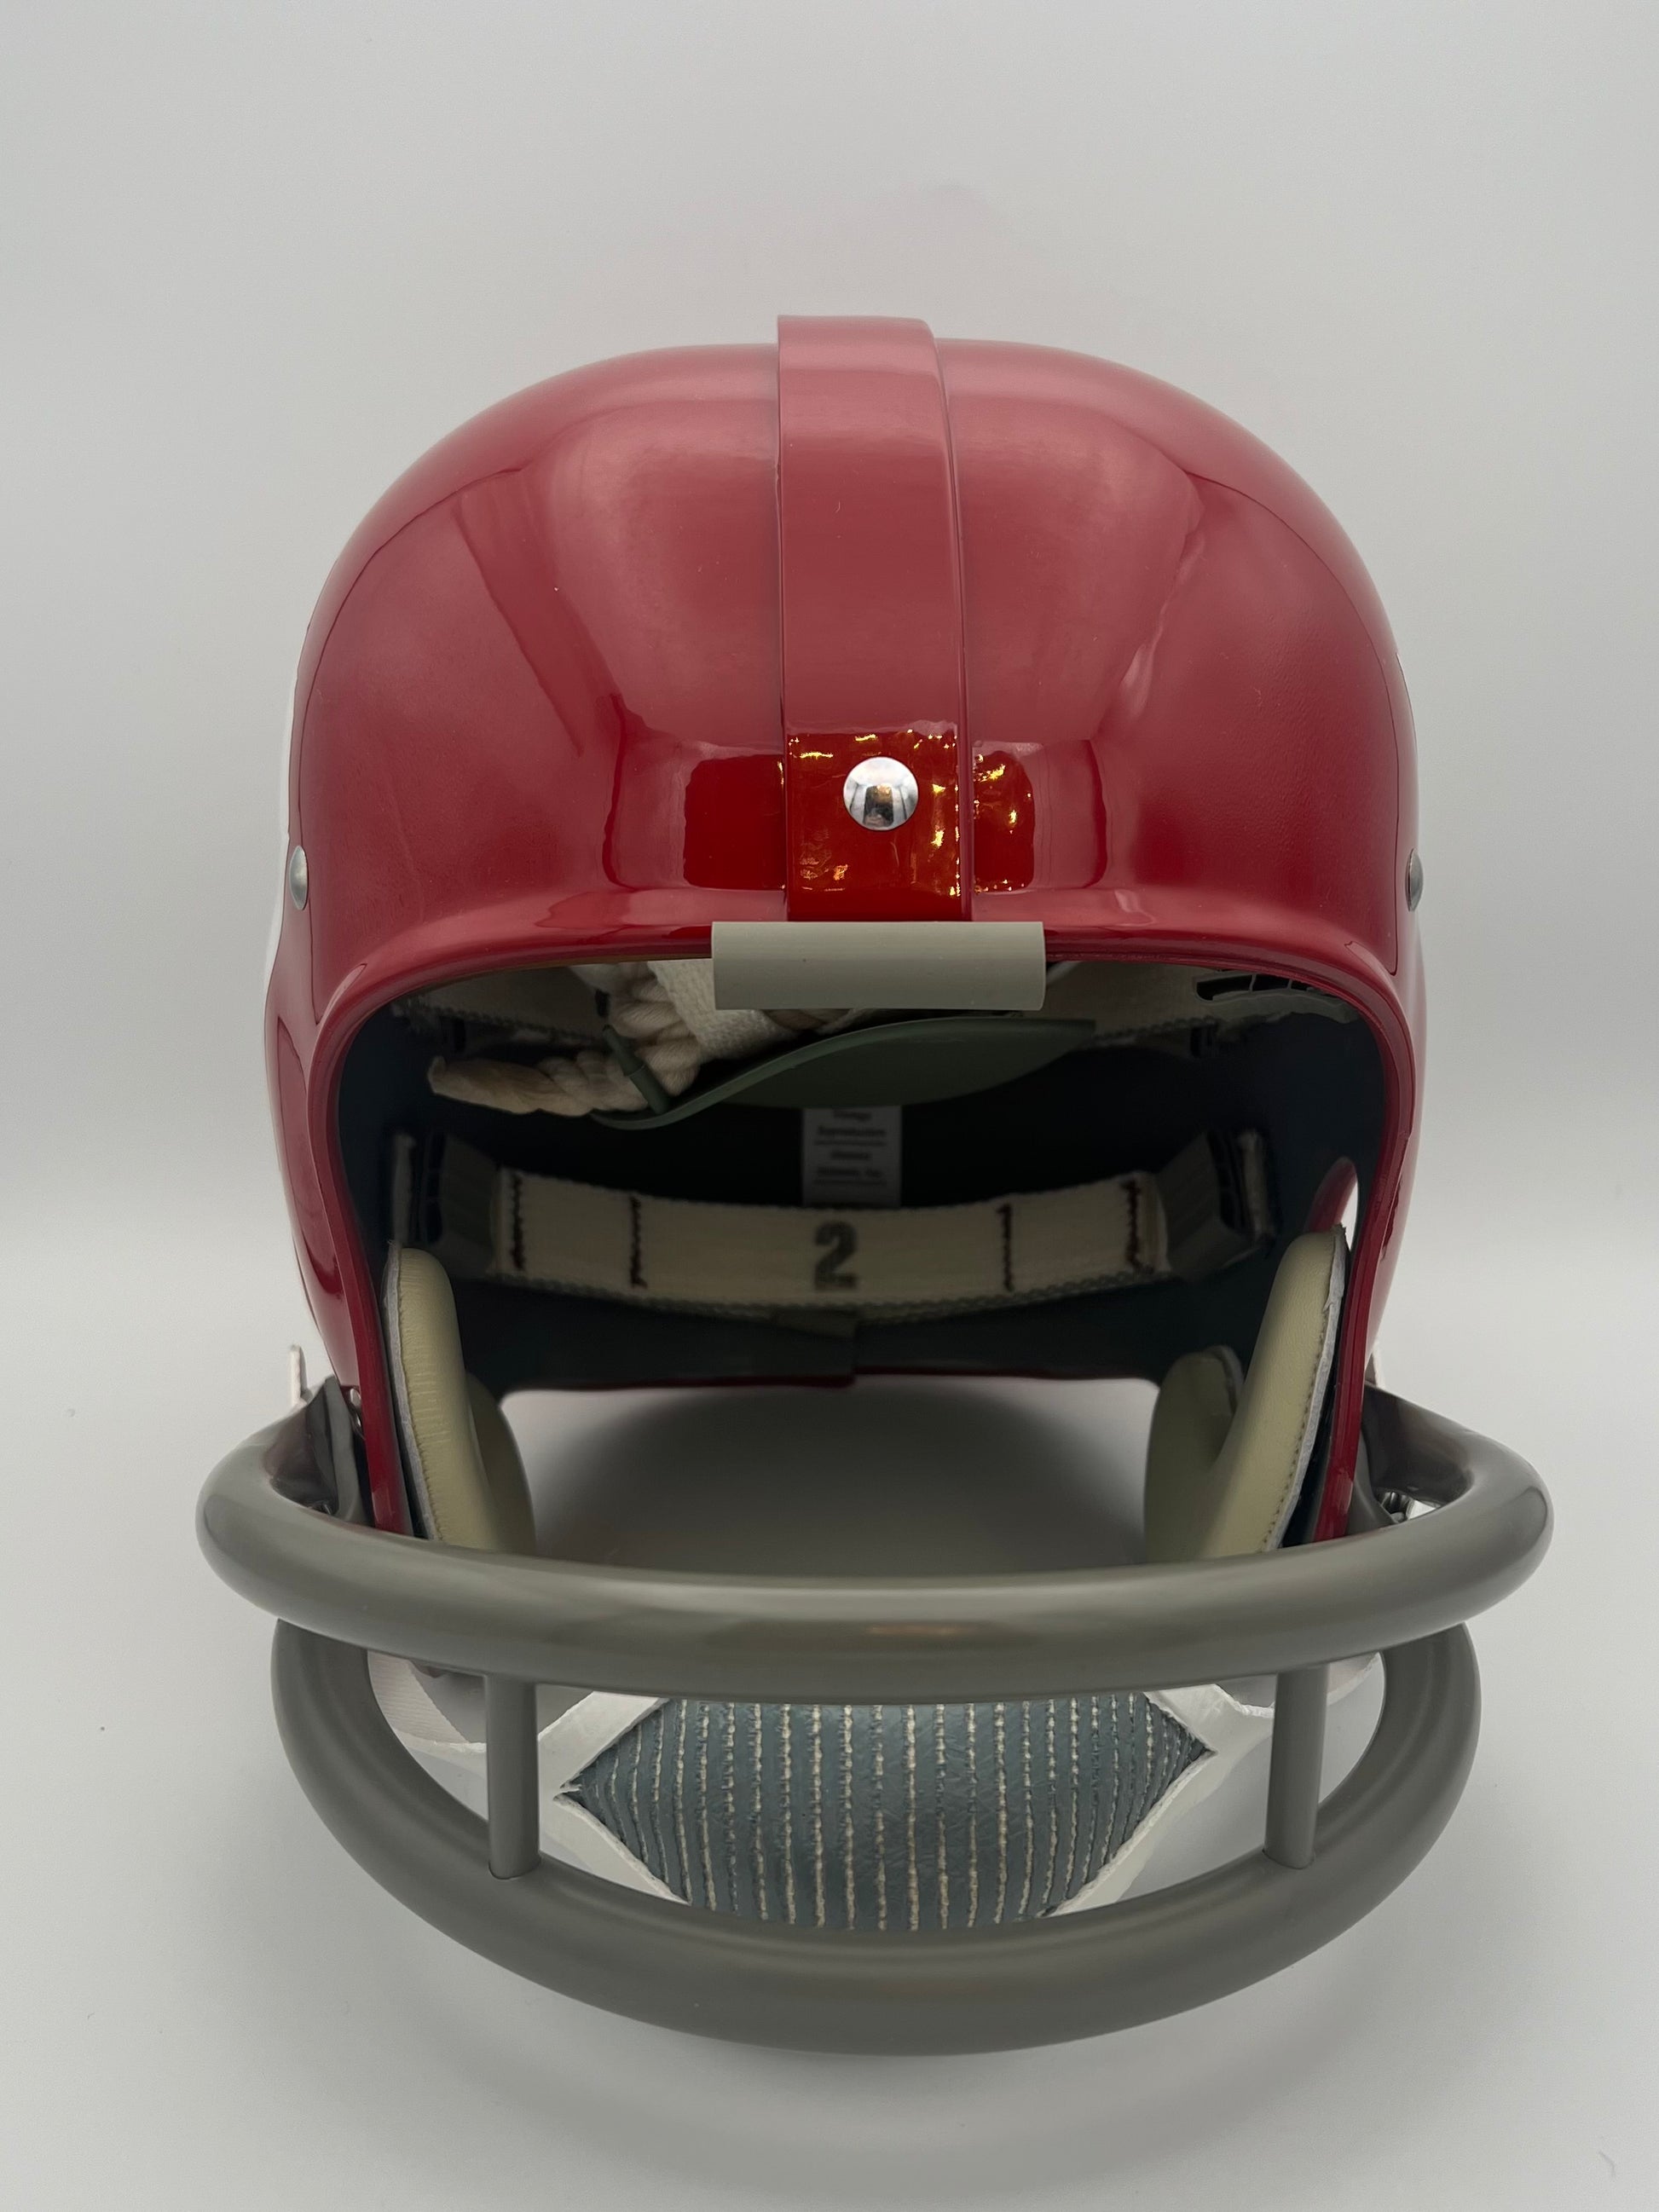 RK2 Vintage Style 1960-62 Dallas Texans Football Helmet Original AFL Team Sports Mem, Cards & Fan Shop:Game Used Memorabilia:Football-NFL:Helmet WESTBROOKSPORTSCARDS   